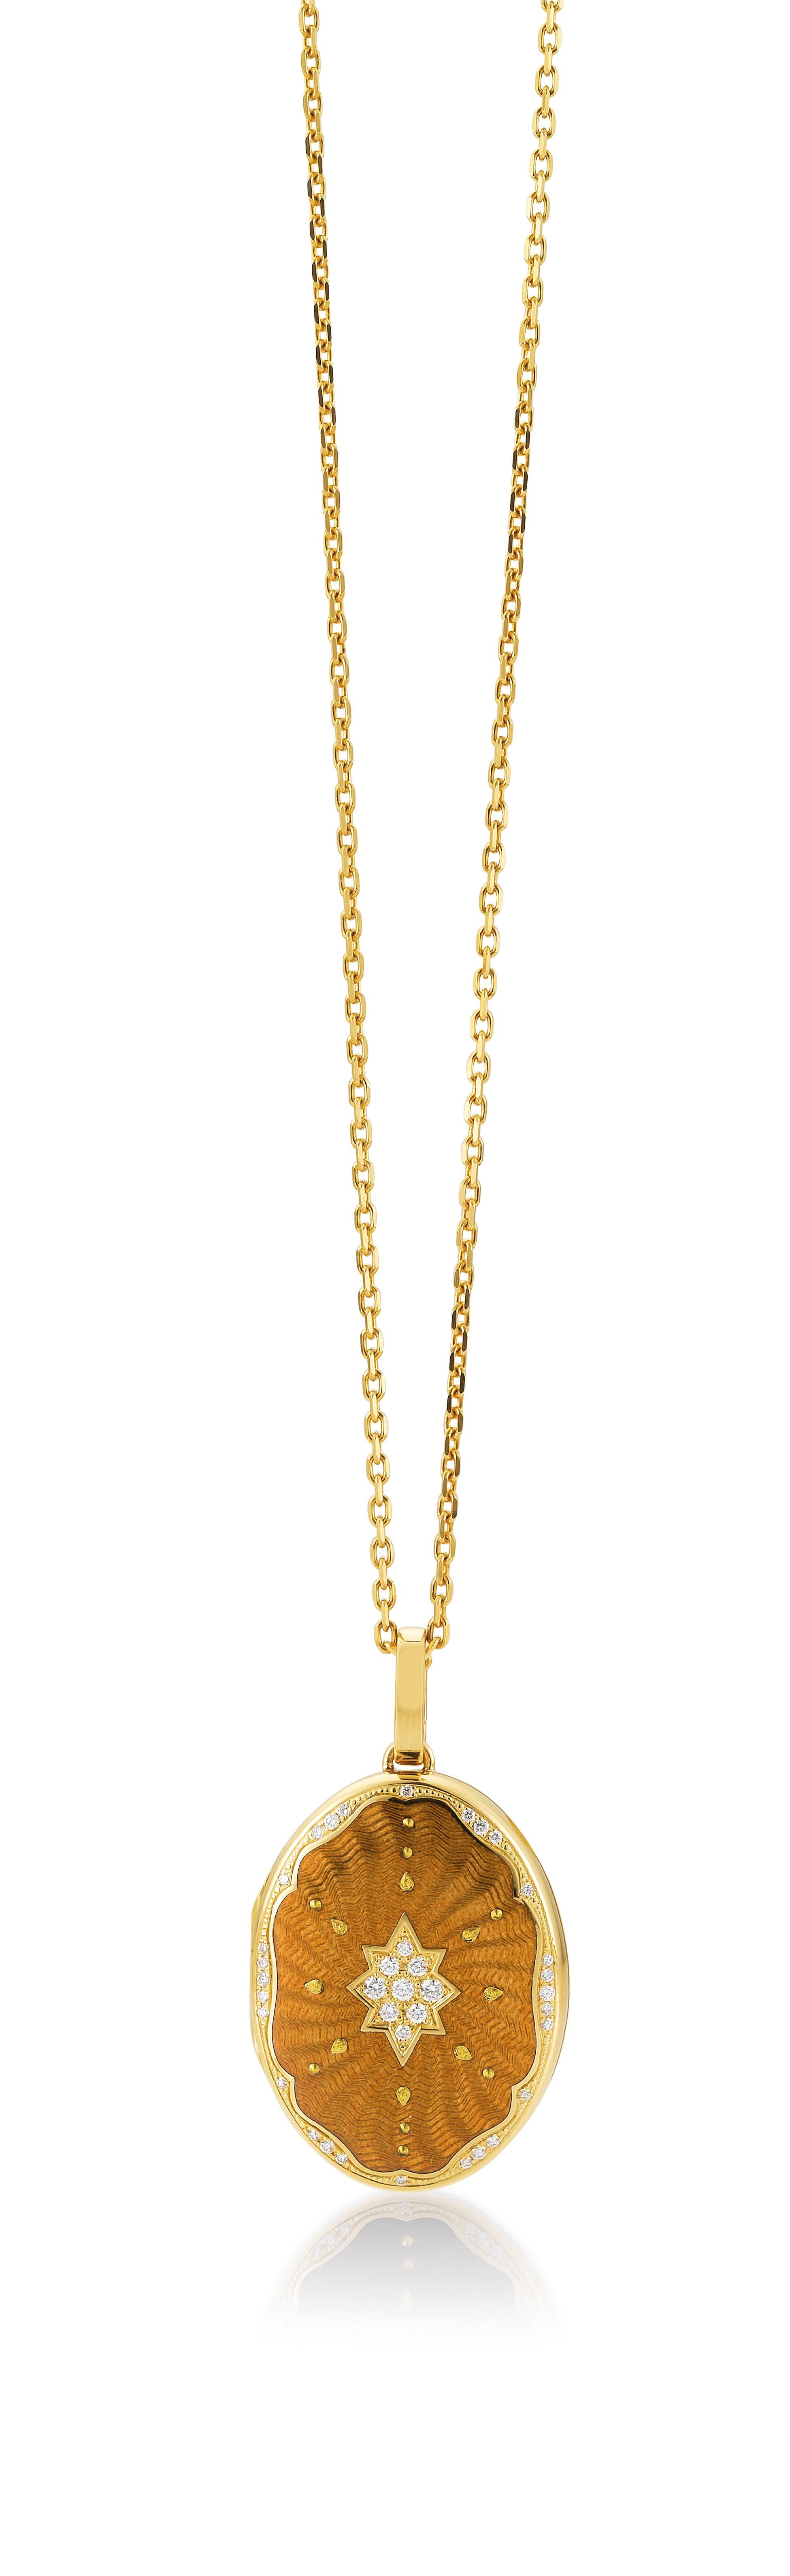 Brilliant Cut Oval Locket Pendant Necklace 18k Yellow Gold Yellow Enamel 37 Diamonds 0.29 ct For Sale